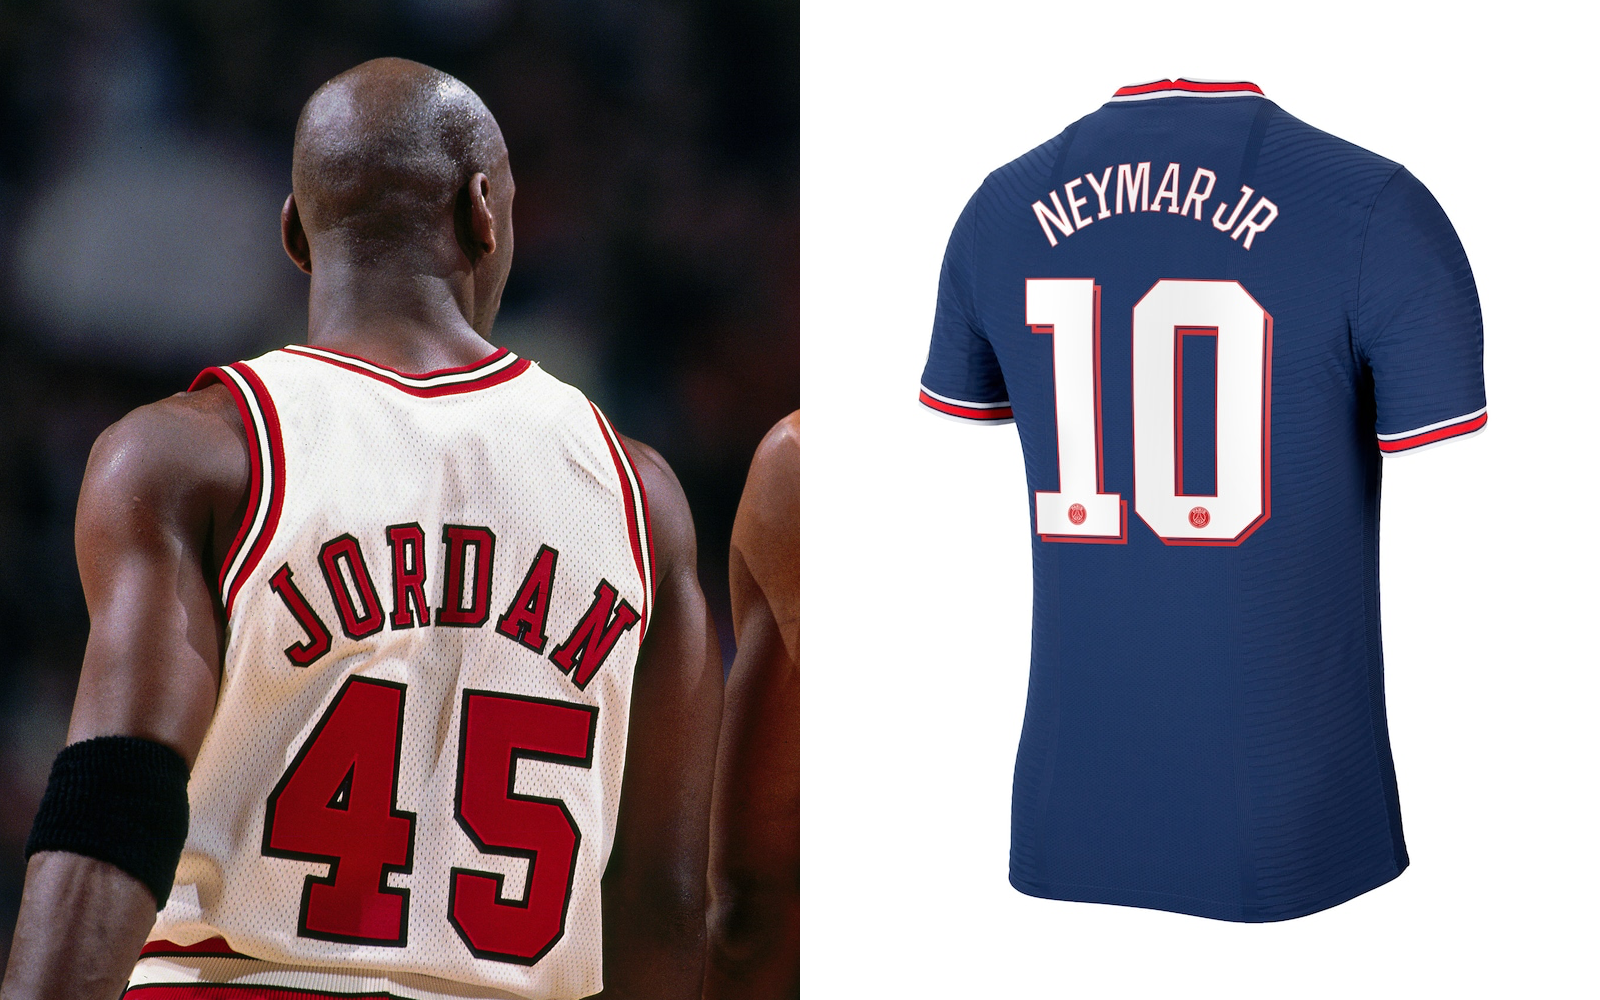 The new Paris Saint-Germain shirt inspired by Michael Jordan's Chicago Bulls